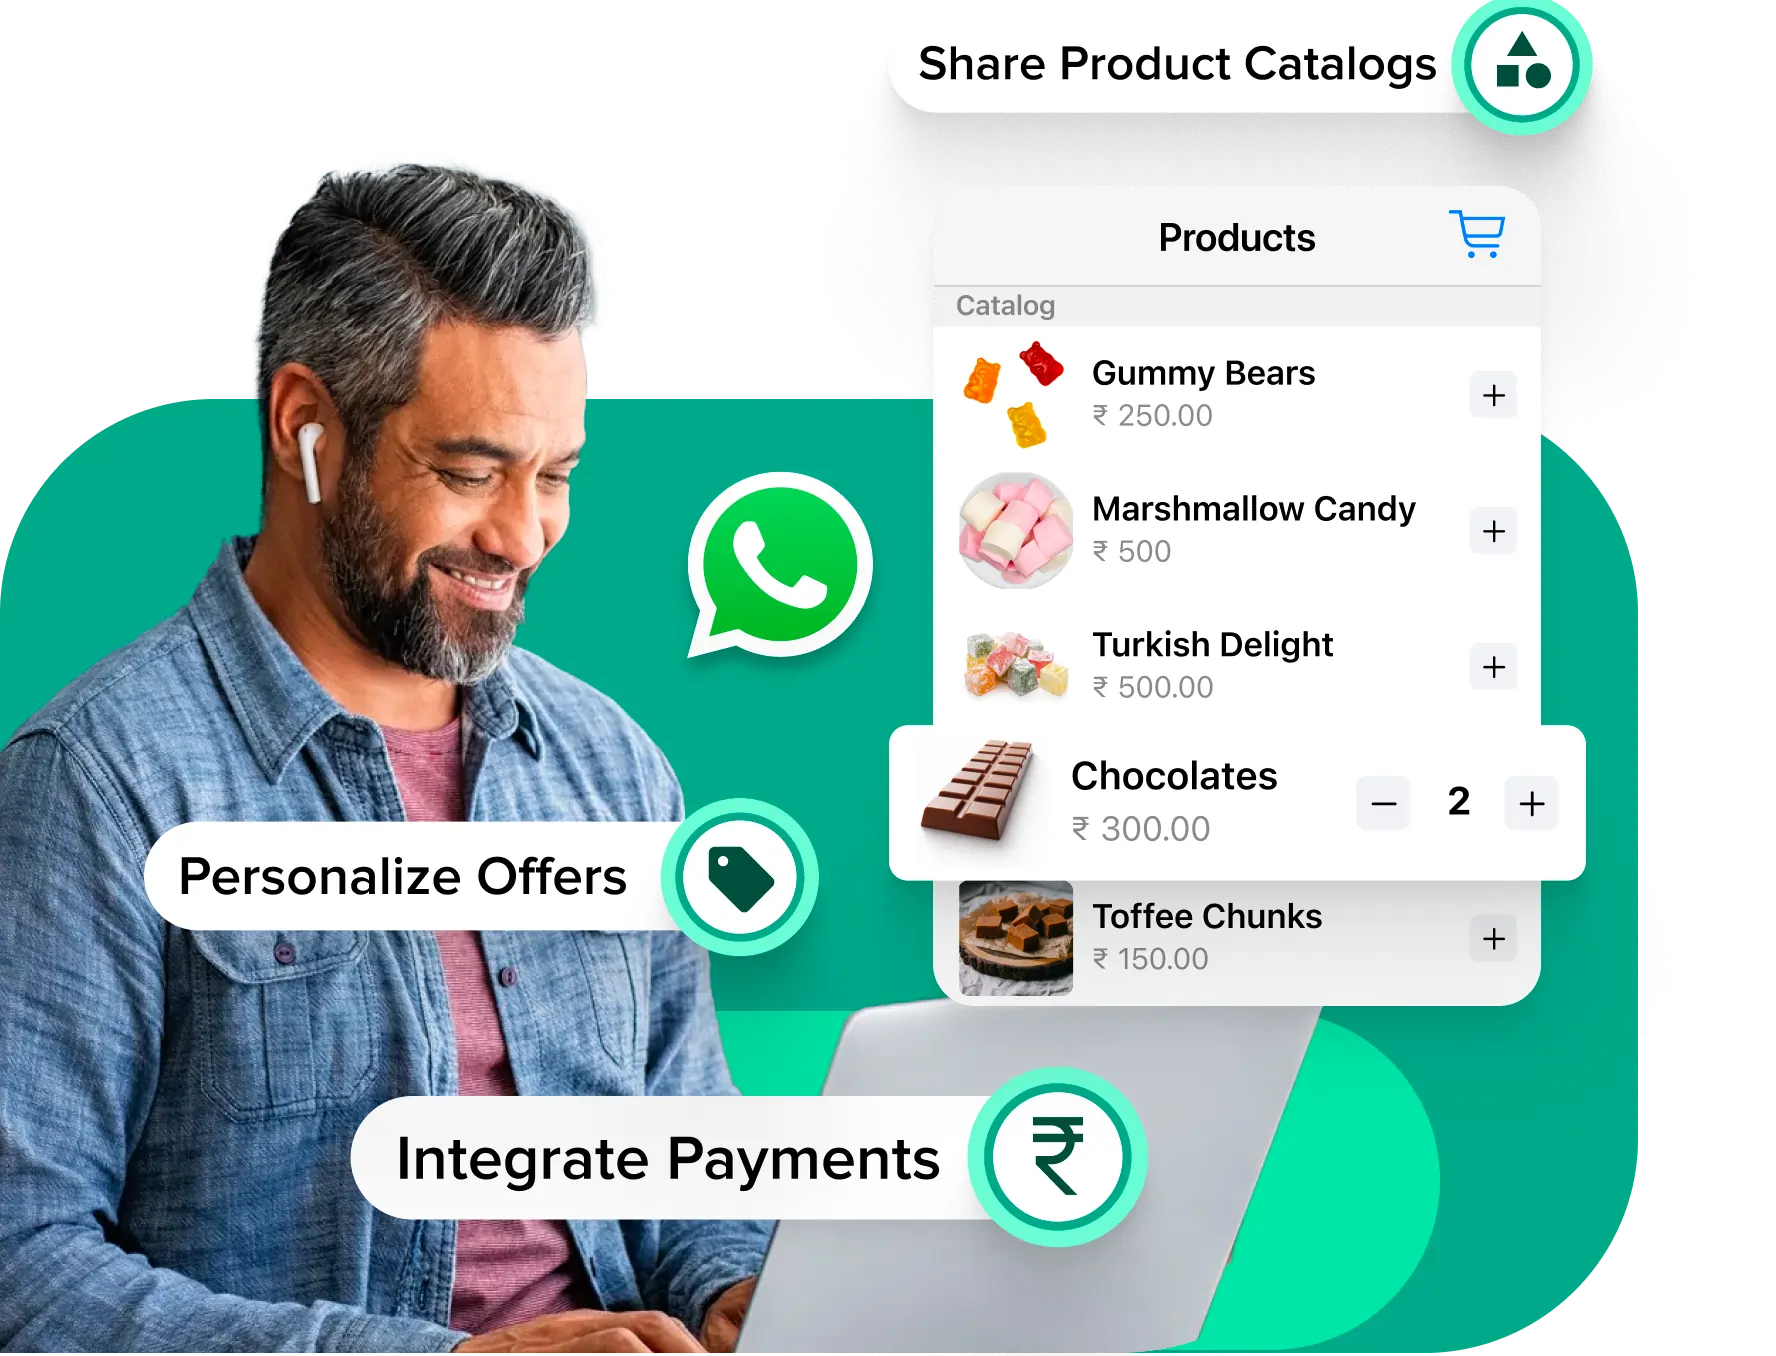 WhatsApp product catalogs